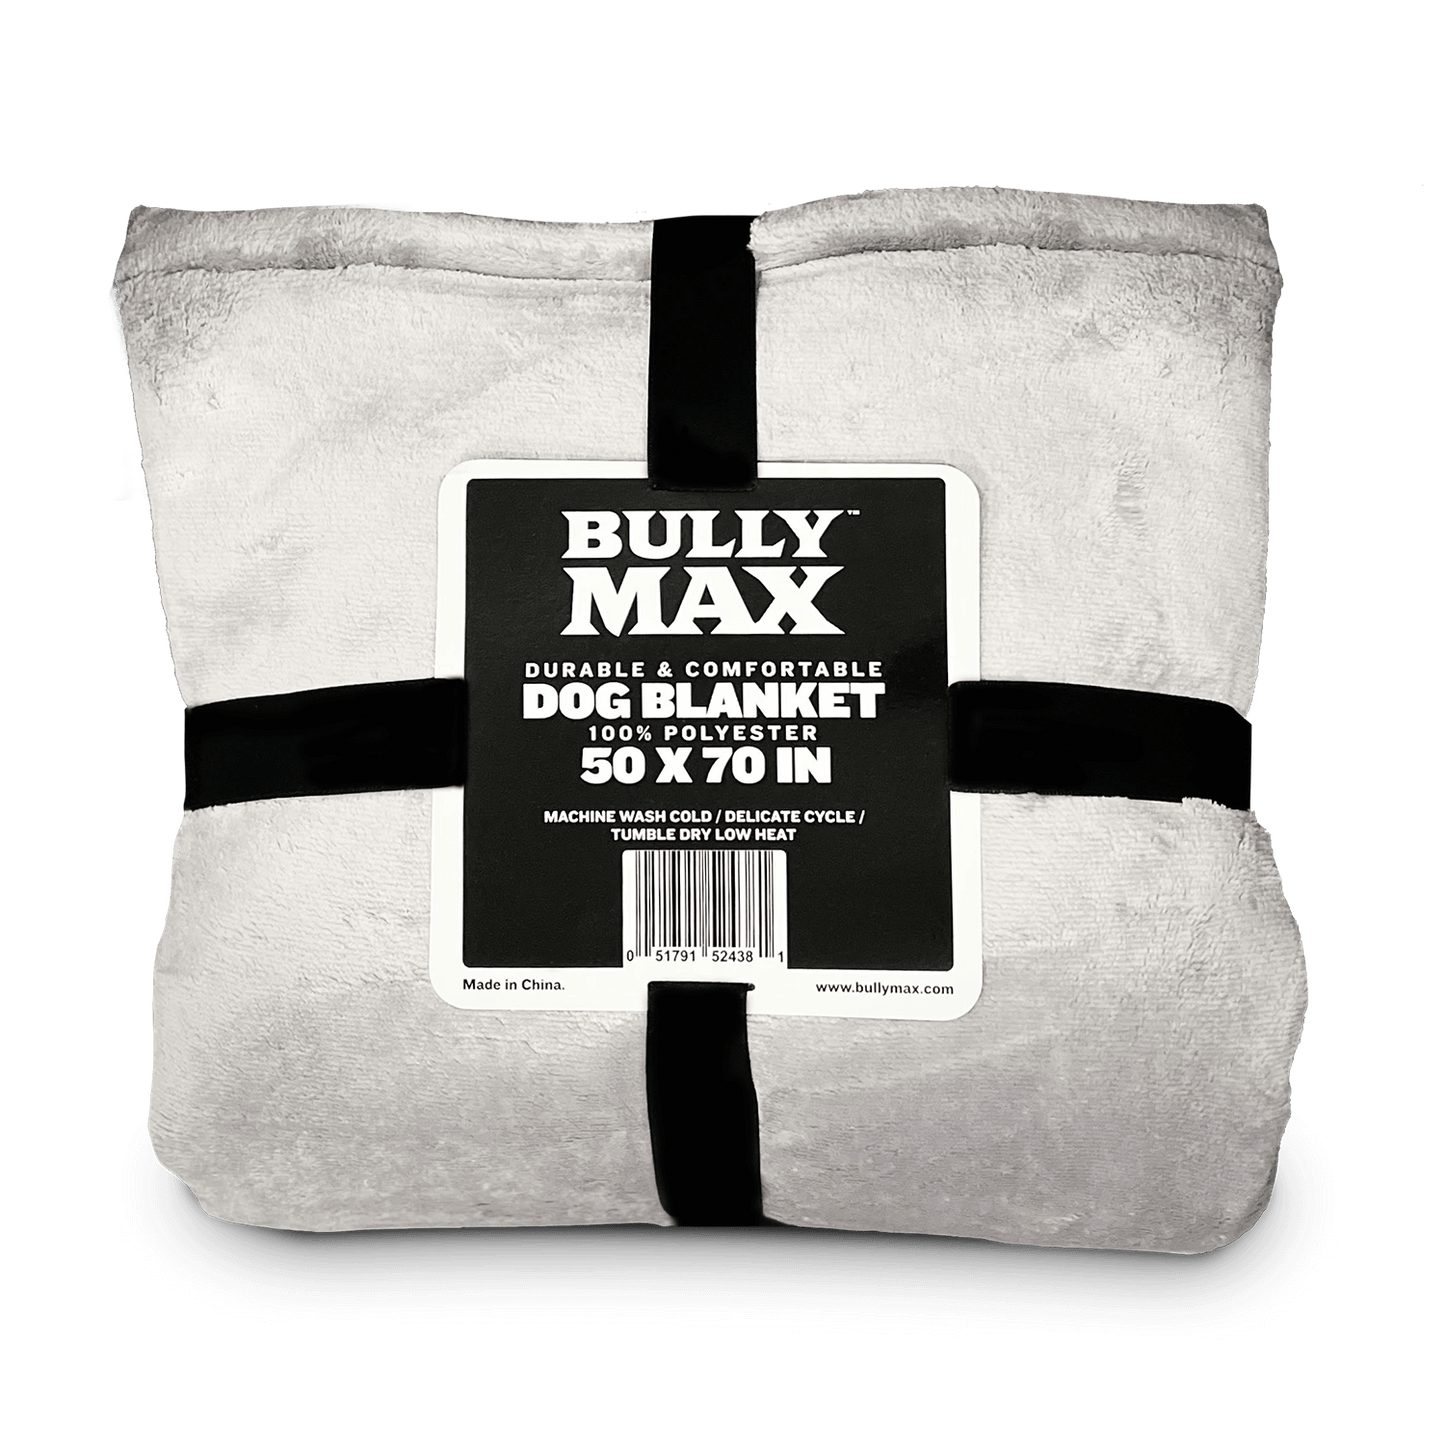 Bully Max High Quality Dog/or Human Blanket